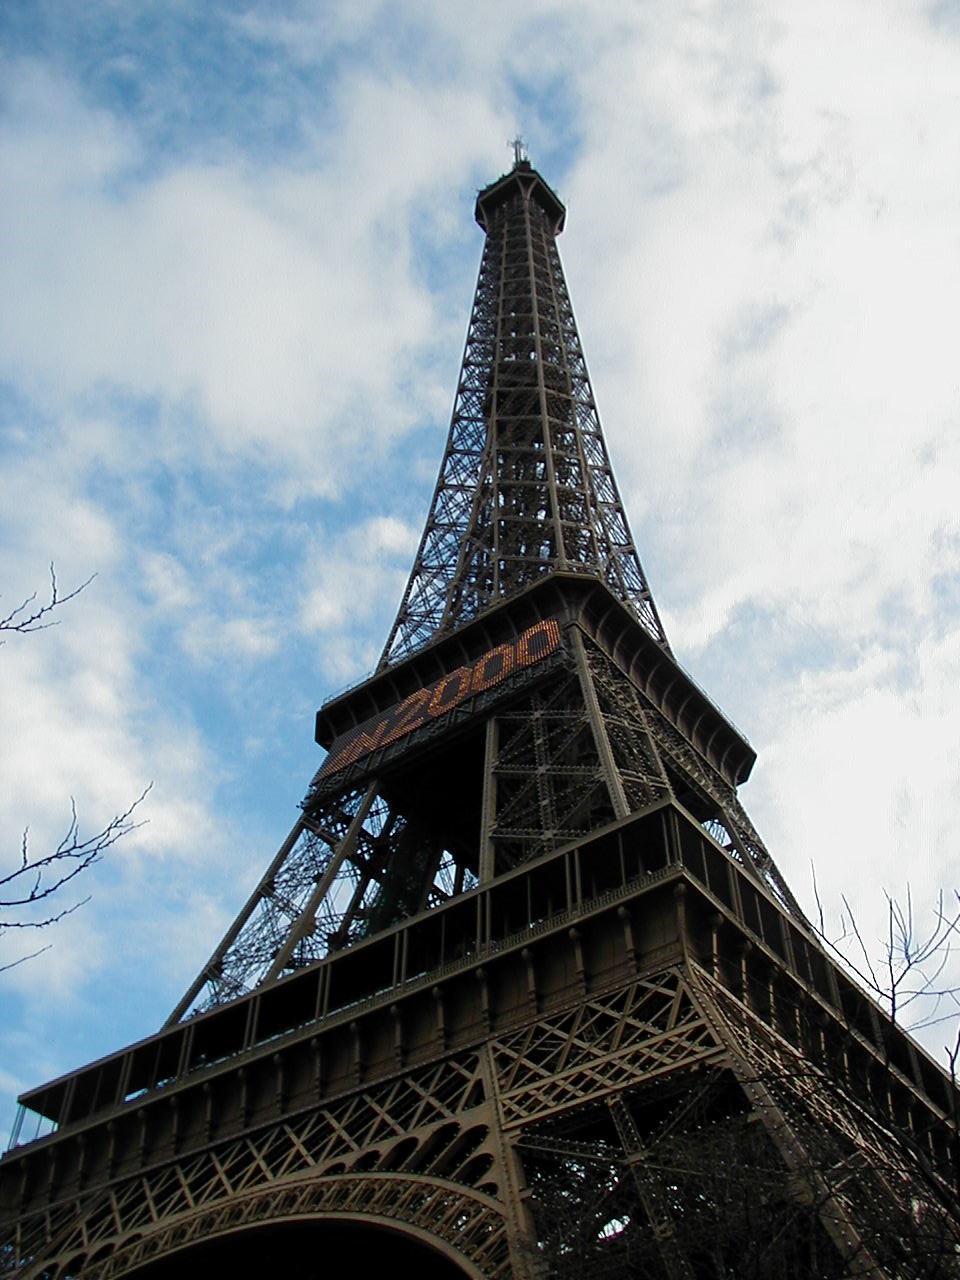 Eiffel Tower, France | Paris | Tower | Travel | Architecture